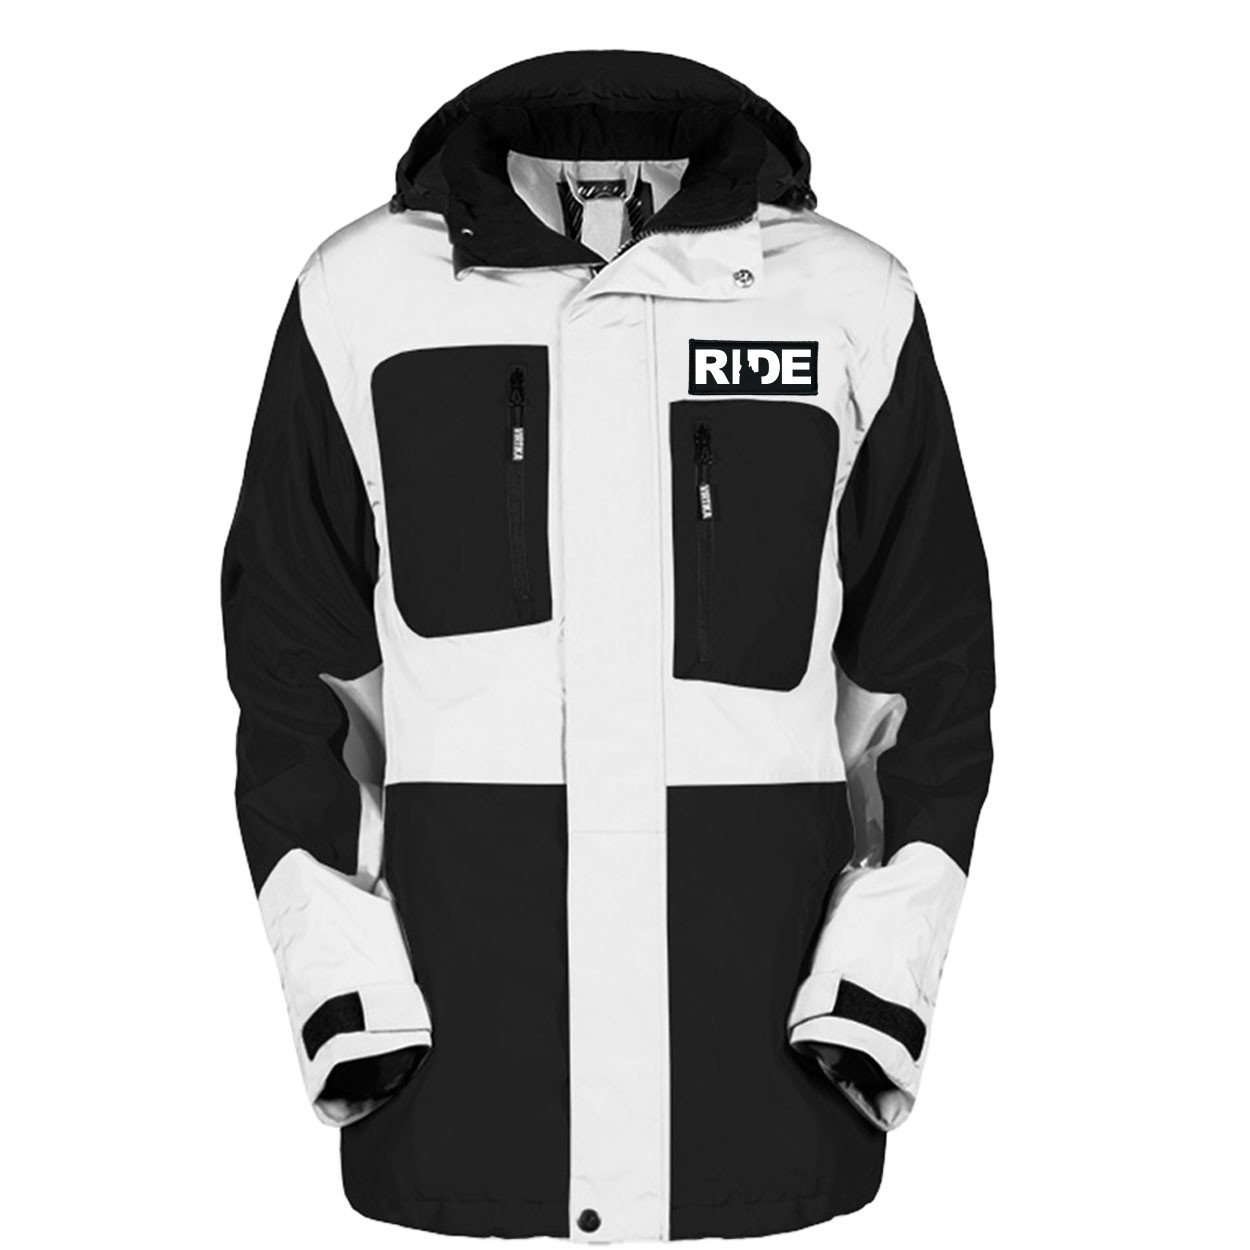 Ride Idaho Classic Woven Patch Pro Snowboard Jacket (Black/White)